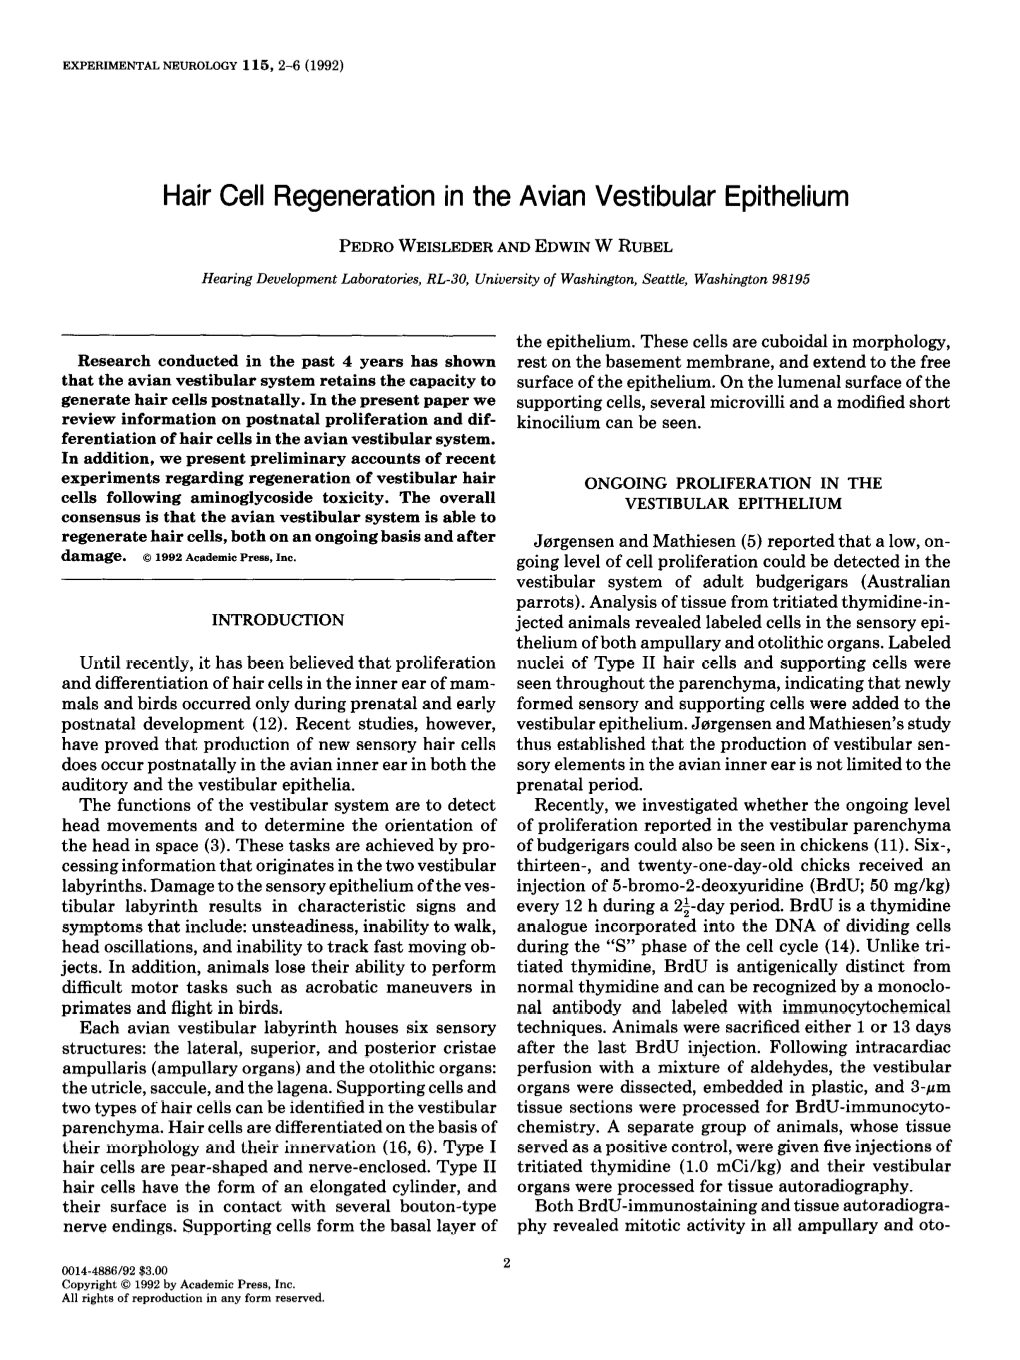 Hair Cell Regeneration in the Avian Vestibular Epithelium